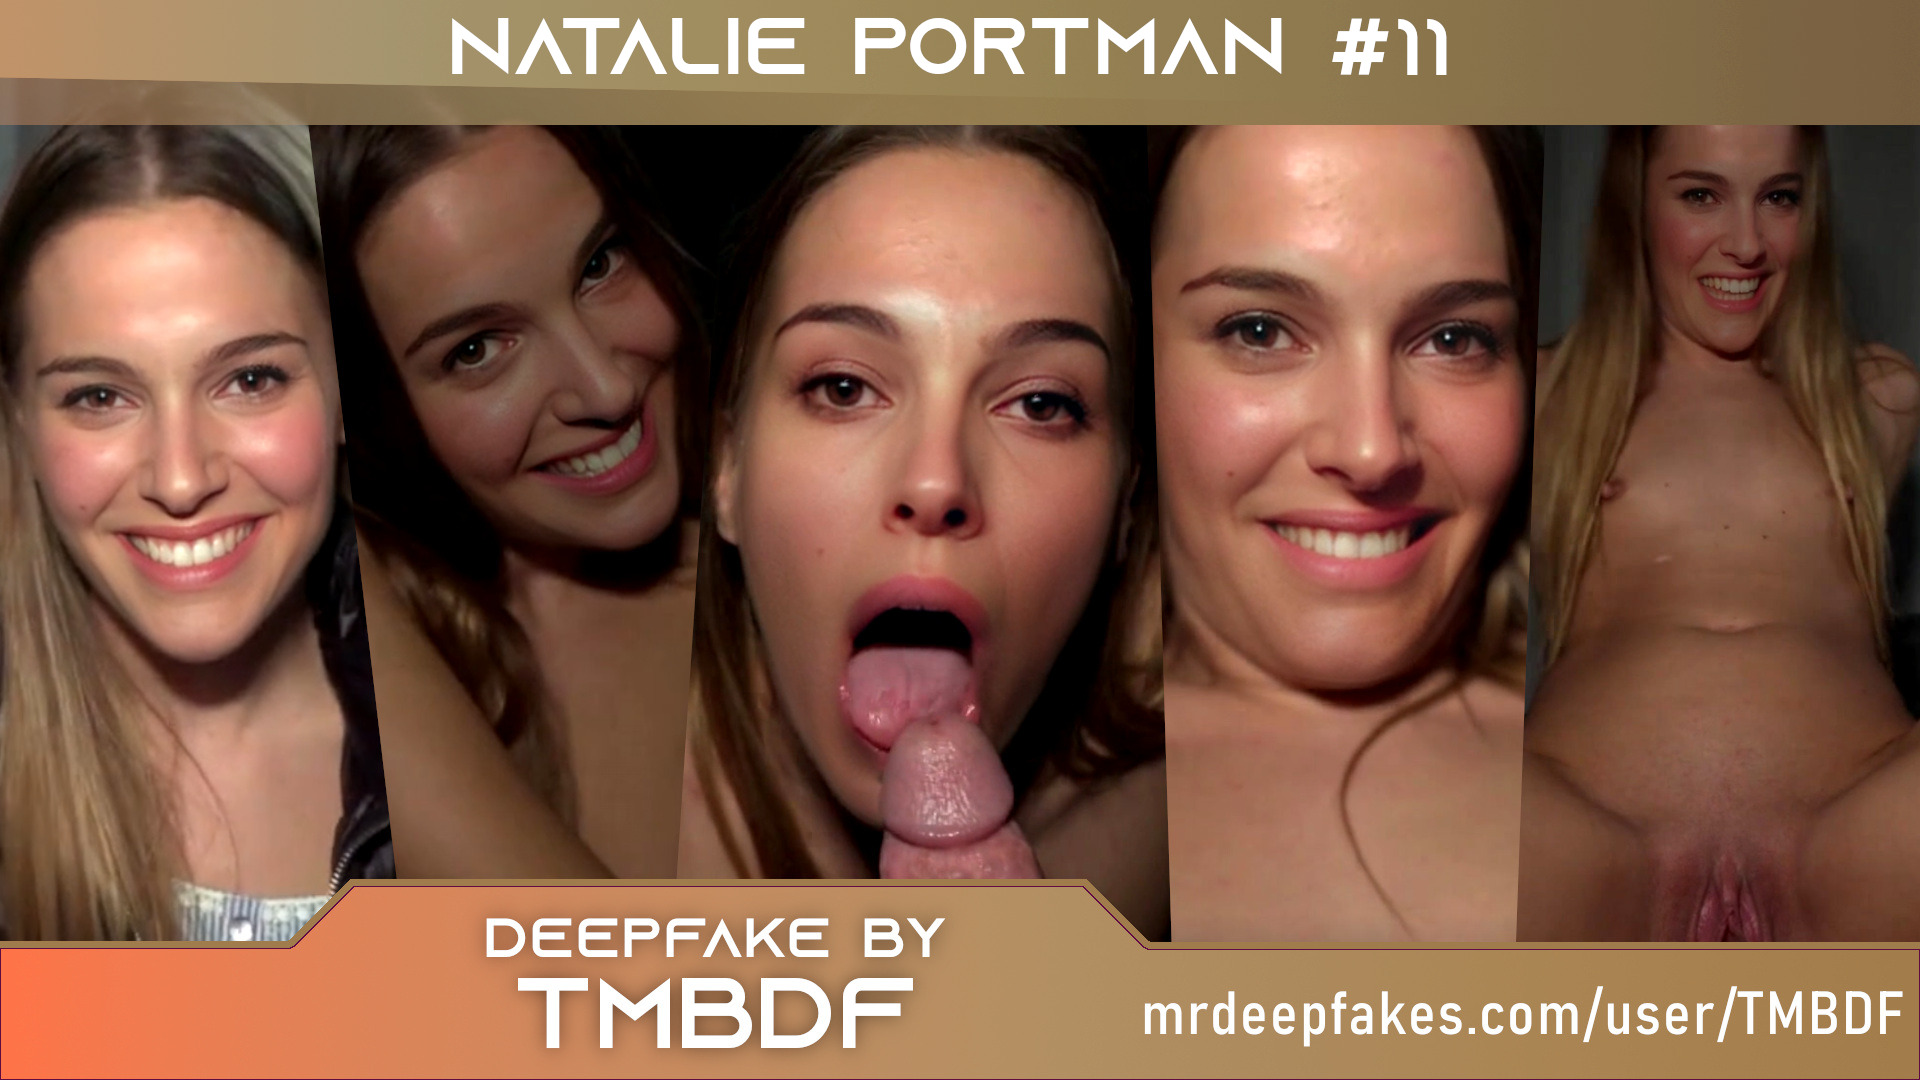 Natalie Portman #11 - PREVIEW - Full version in video description